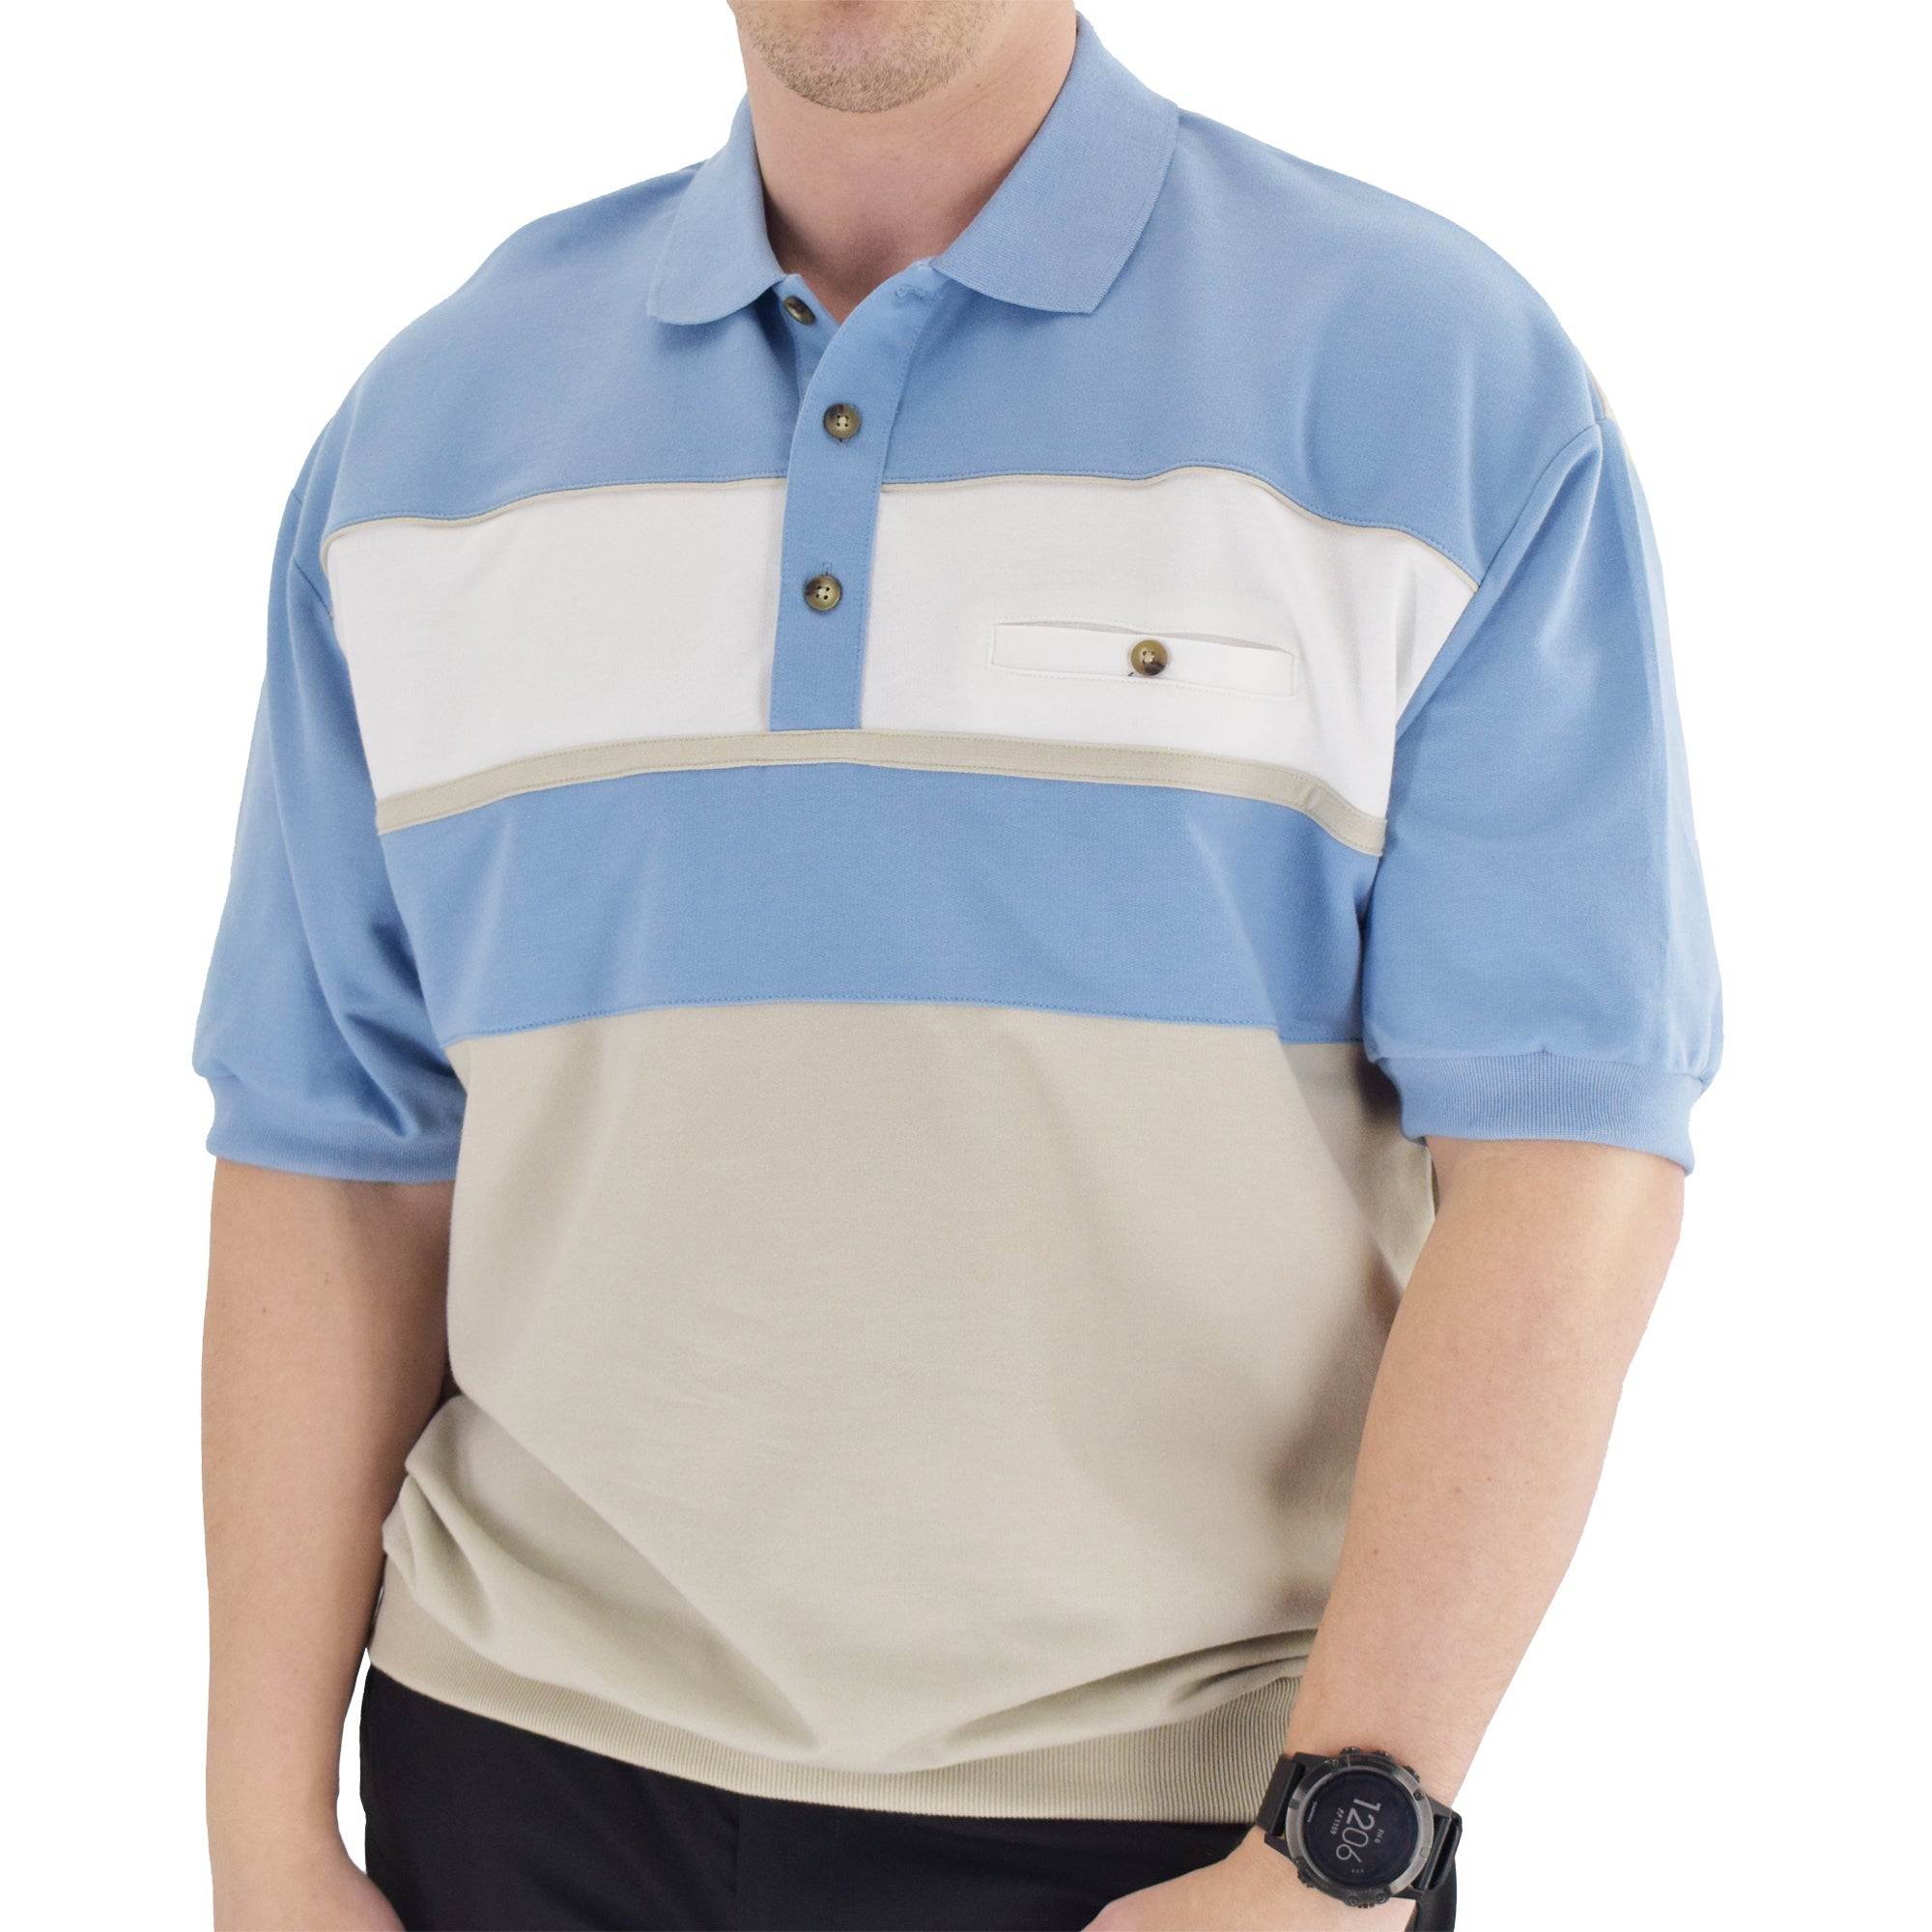 Classics by Palmland Horizontal French Terry knit Banded Bottom Shirt Light Blue - Big and Tall - 6090-BL2 - theflagshirt